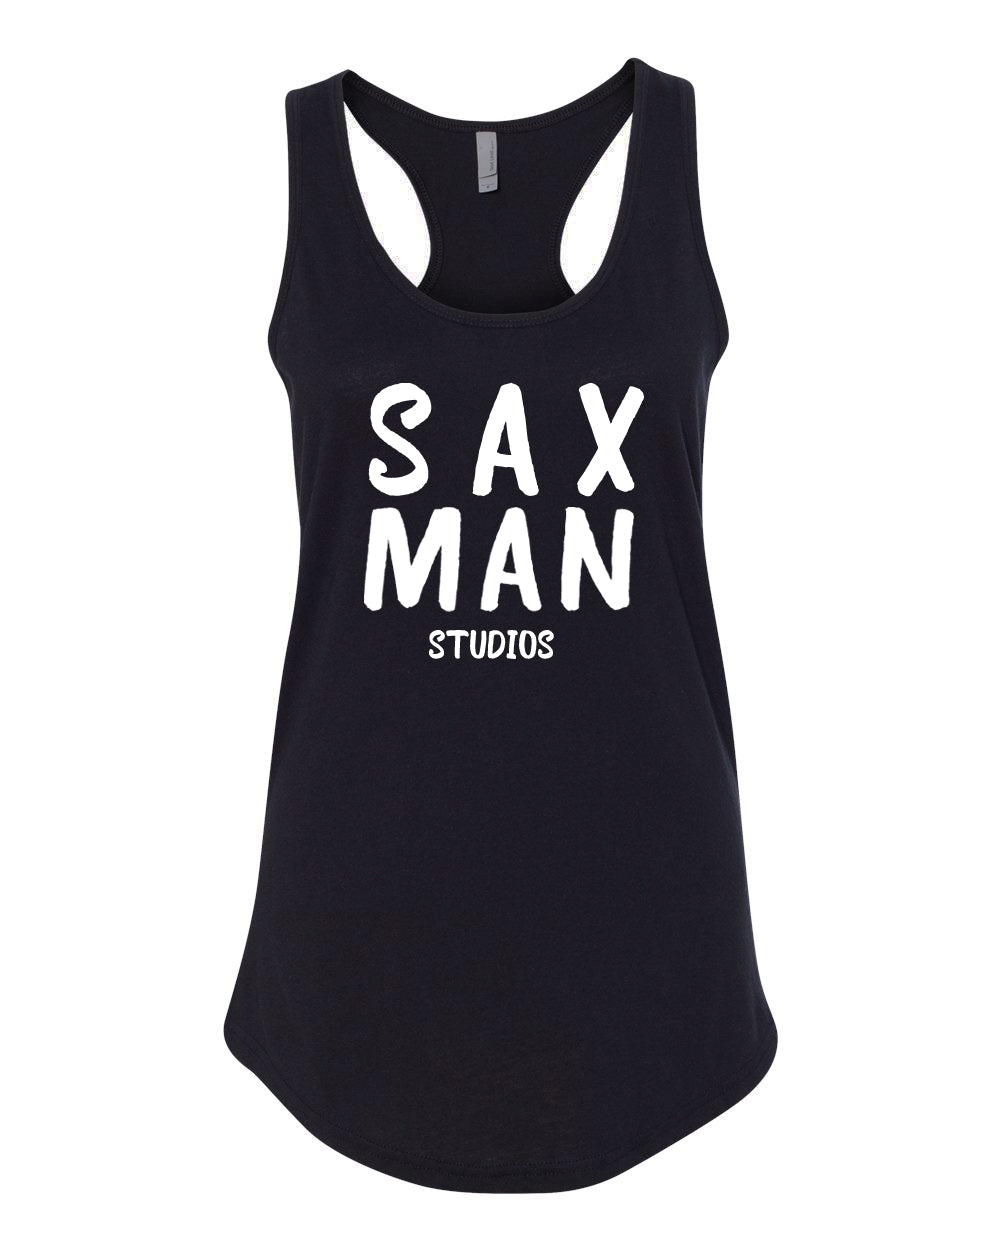 Sax Man Studios Women's Tank